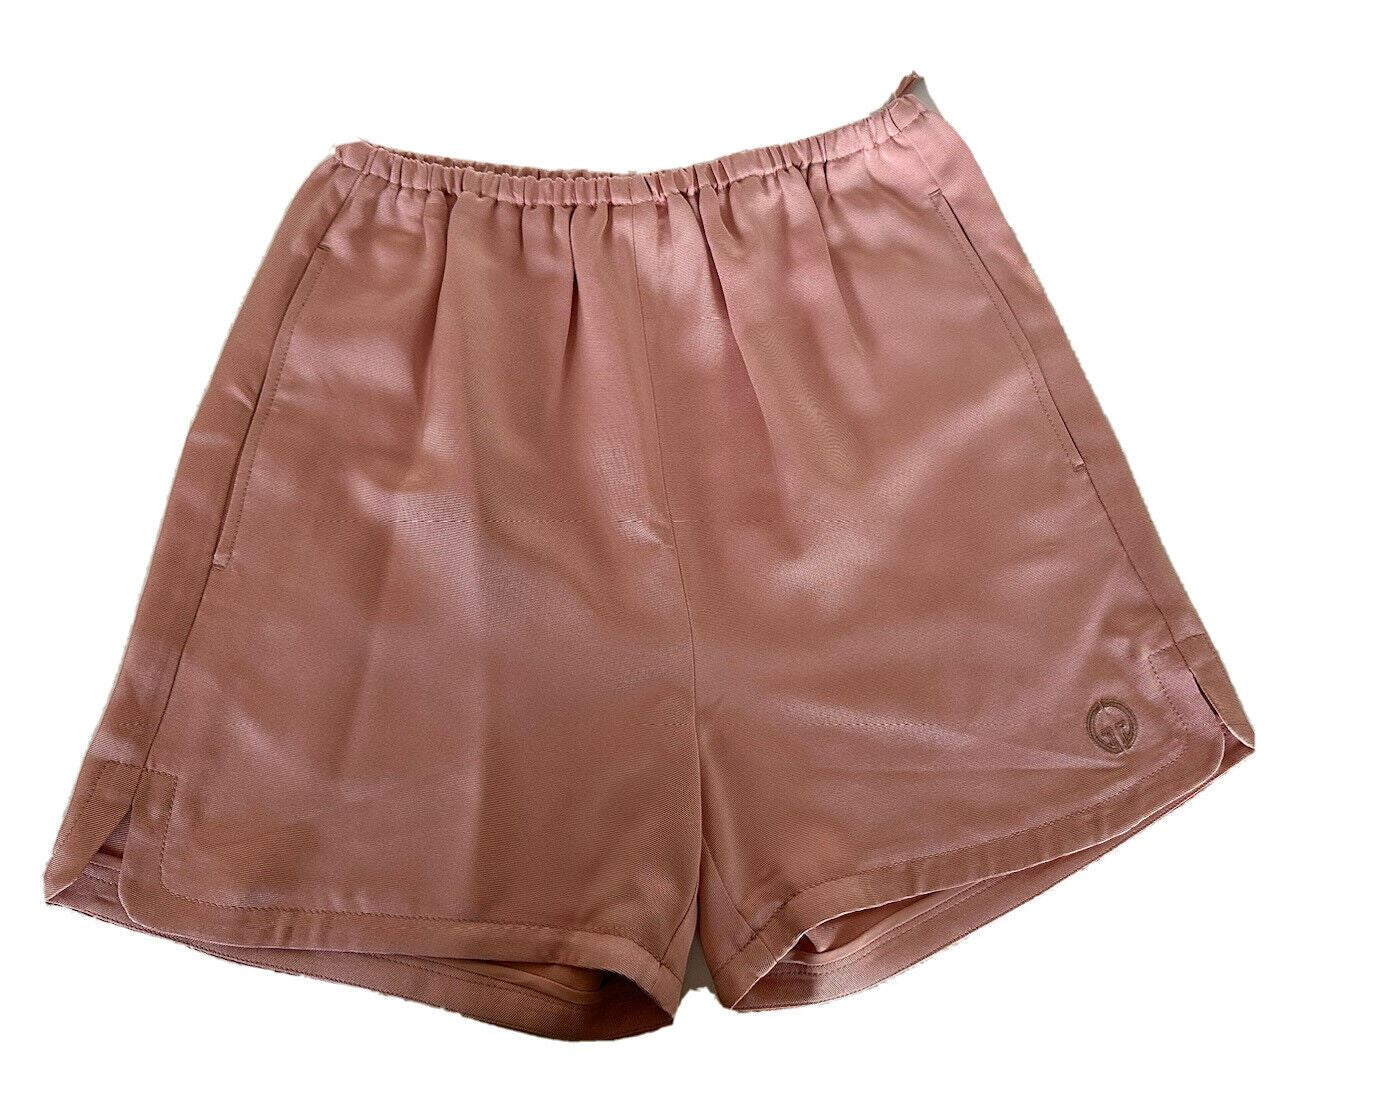 Neu mit Etikett: Gucci Damen-Shorts aus Seide/Viskose, Eisrosa, 36 (XS) 625238, hergestellt in Italien